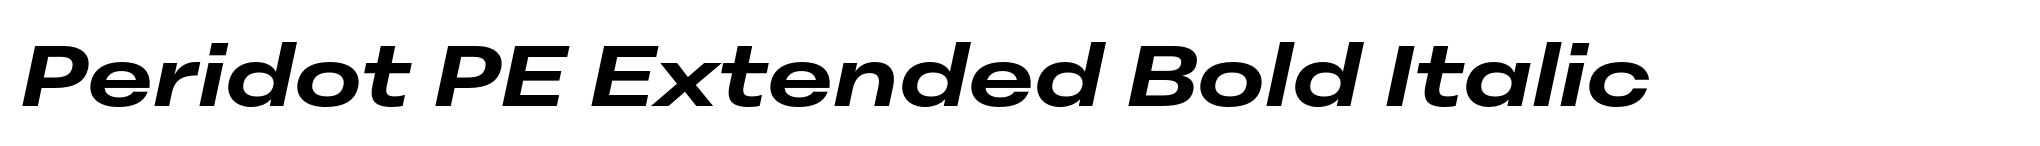 Peridot PE Extended Bold Italic image